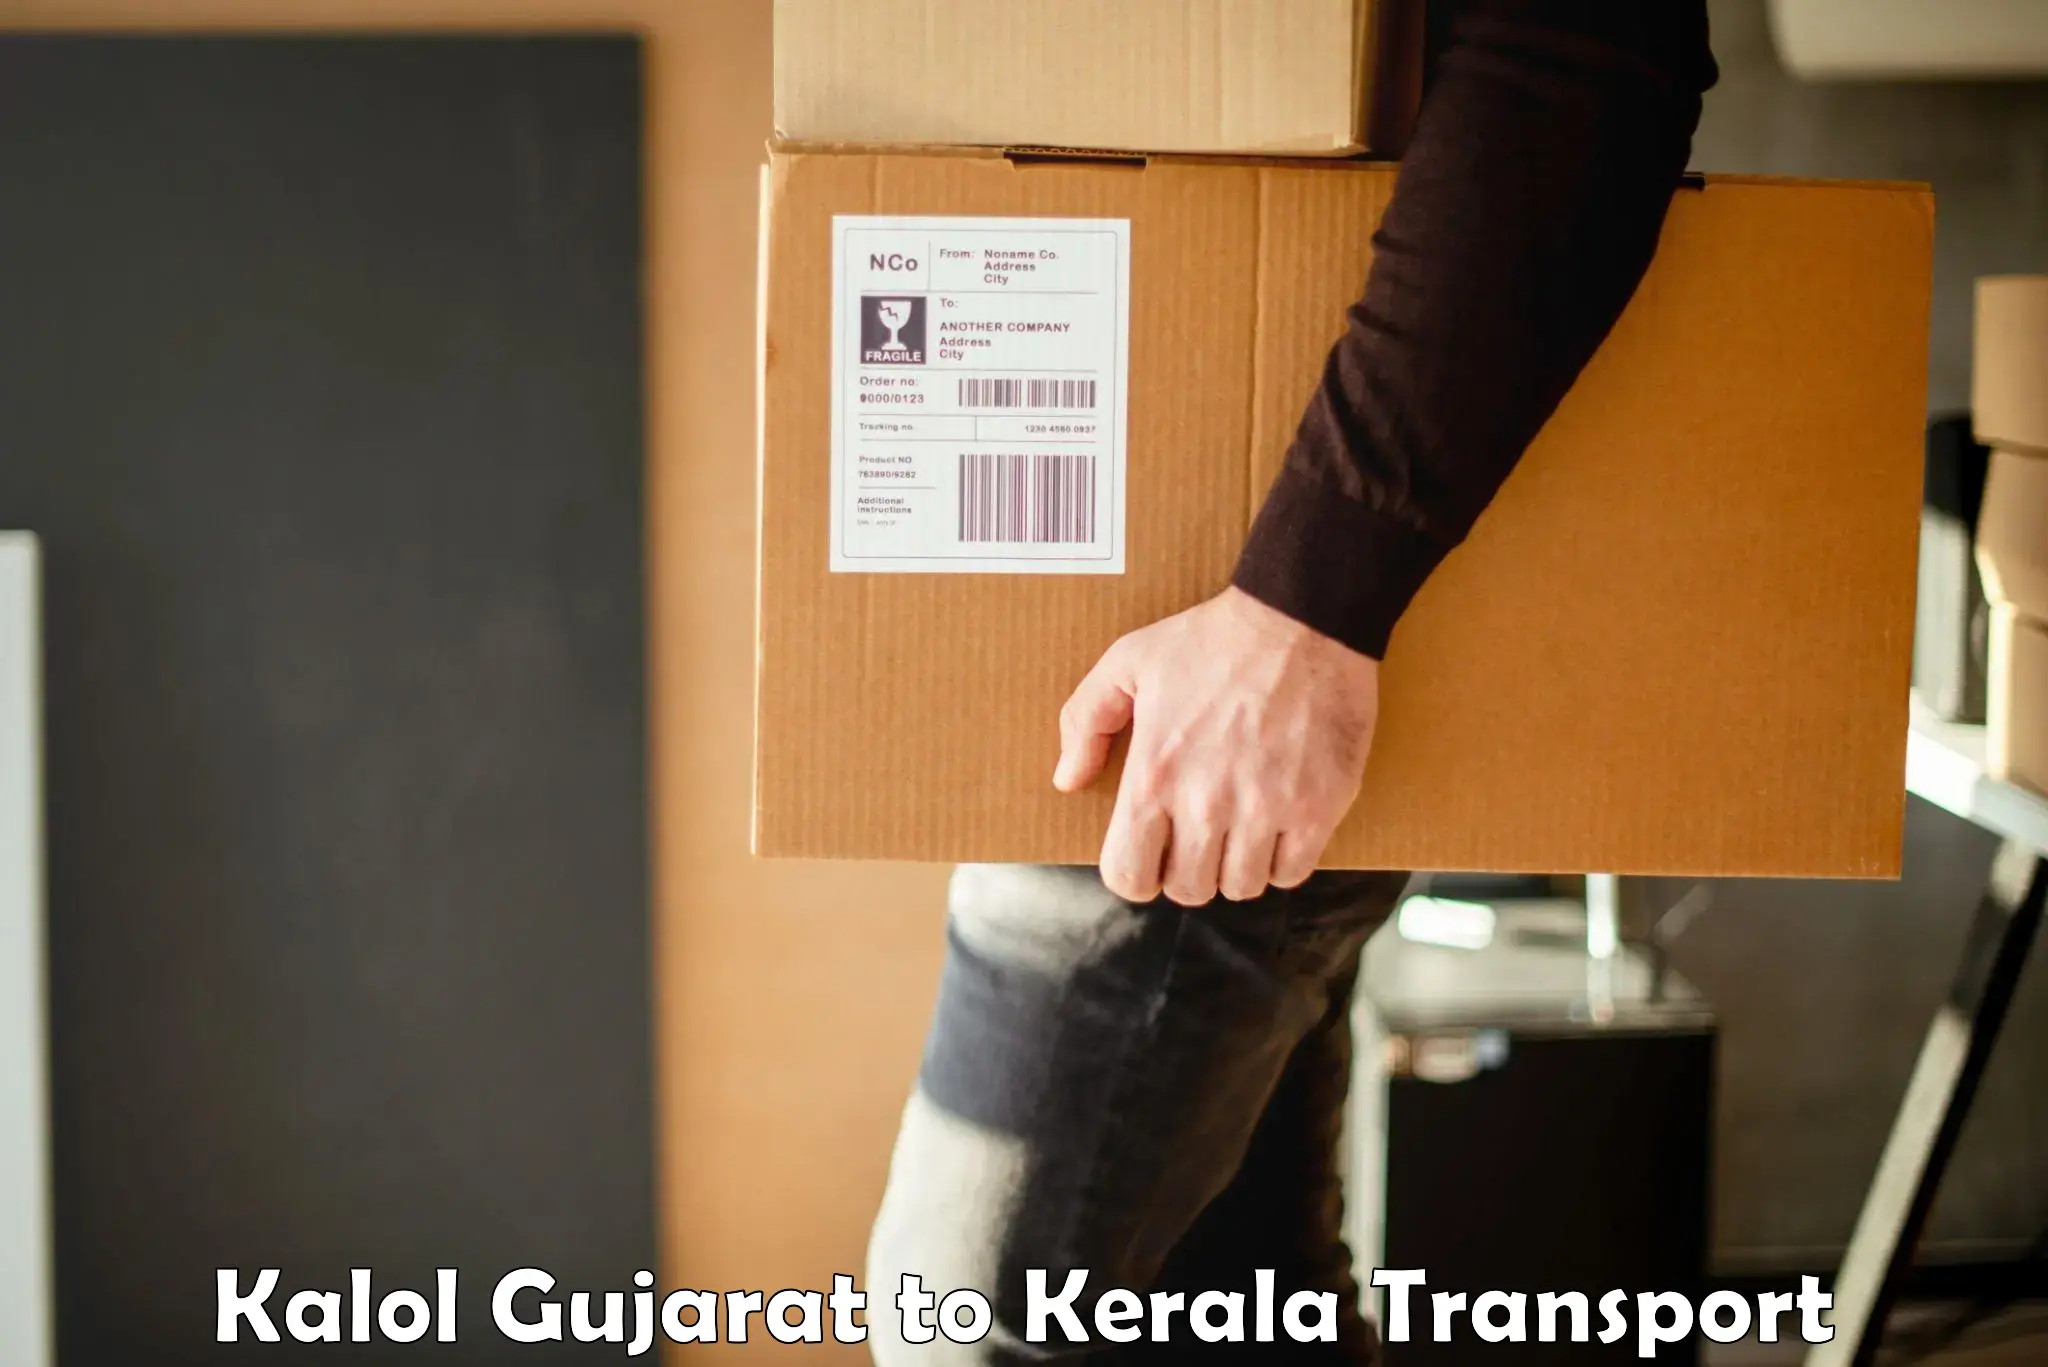 Truck transport companies in India Kalol Gujarat to Guruvayoor